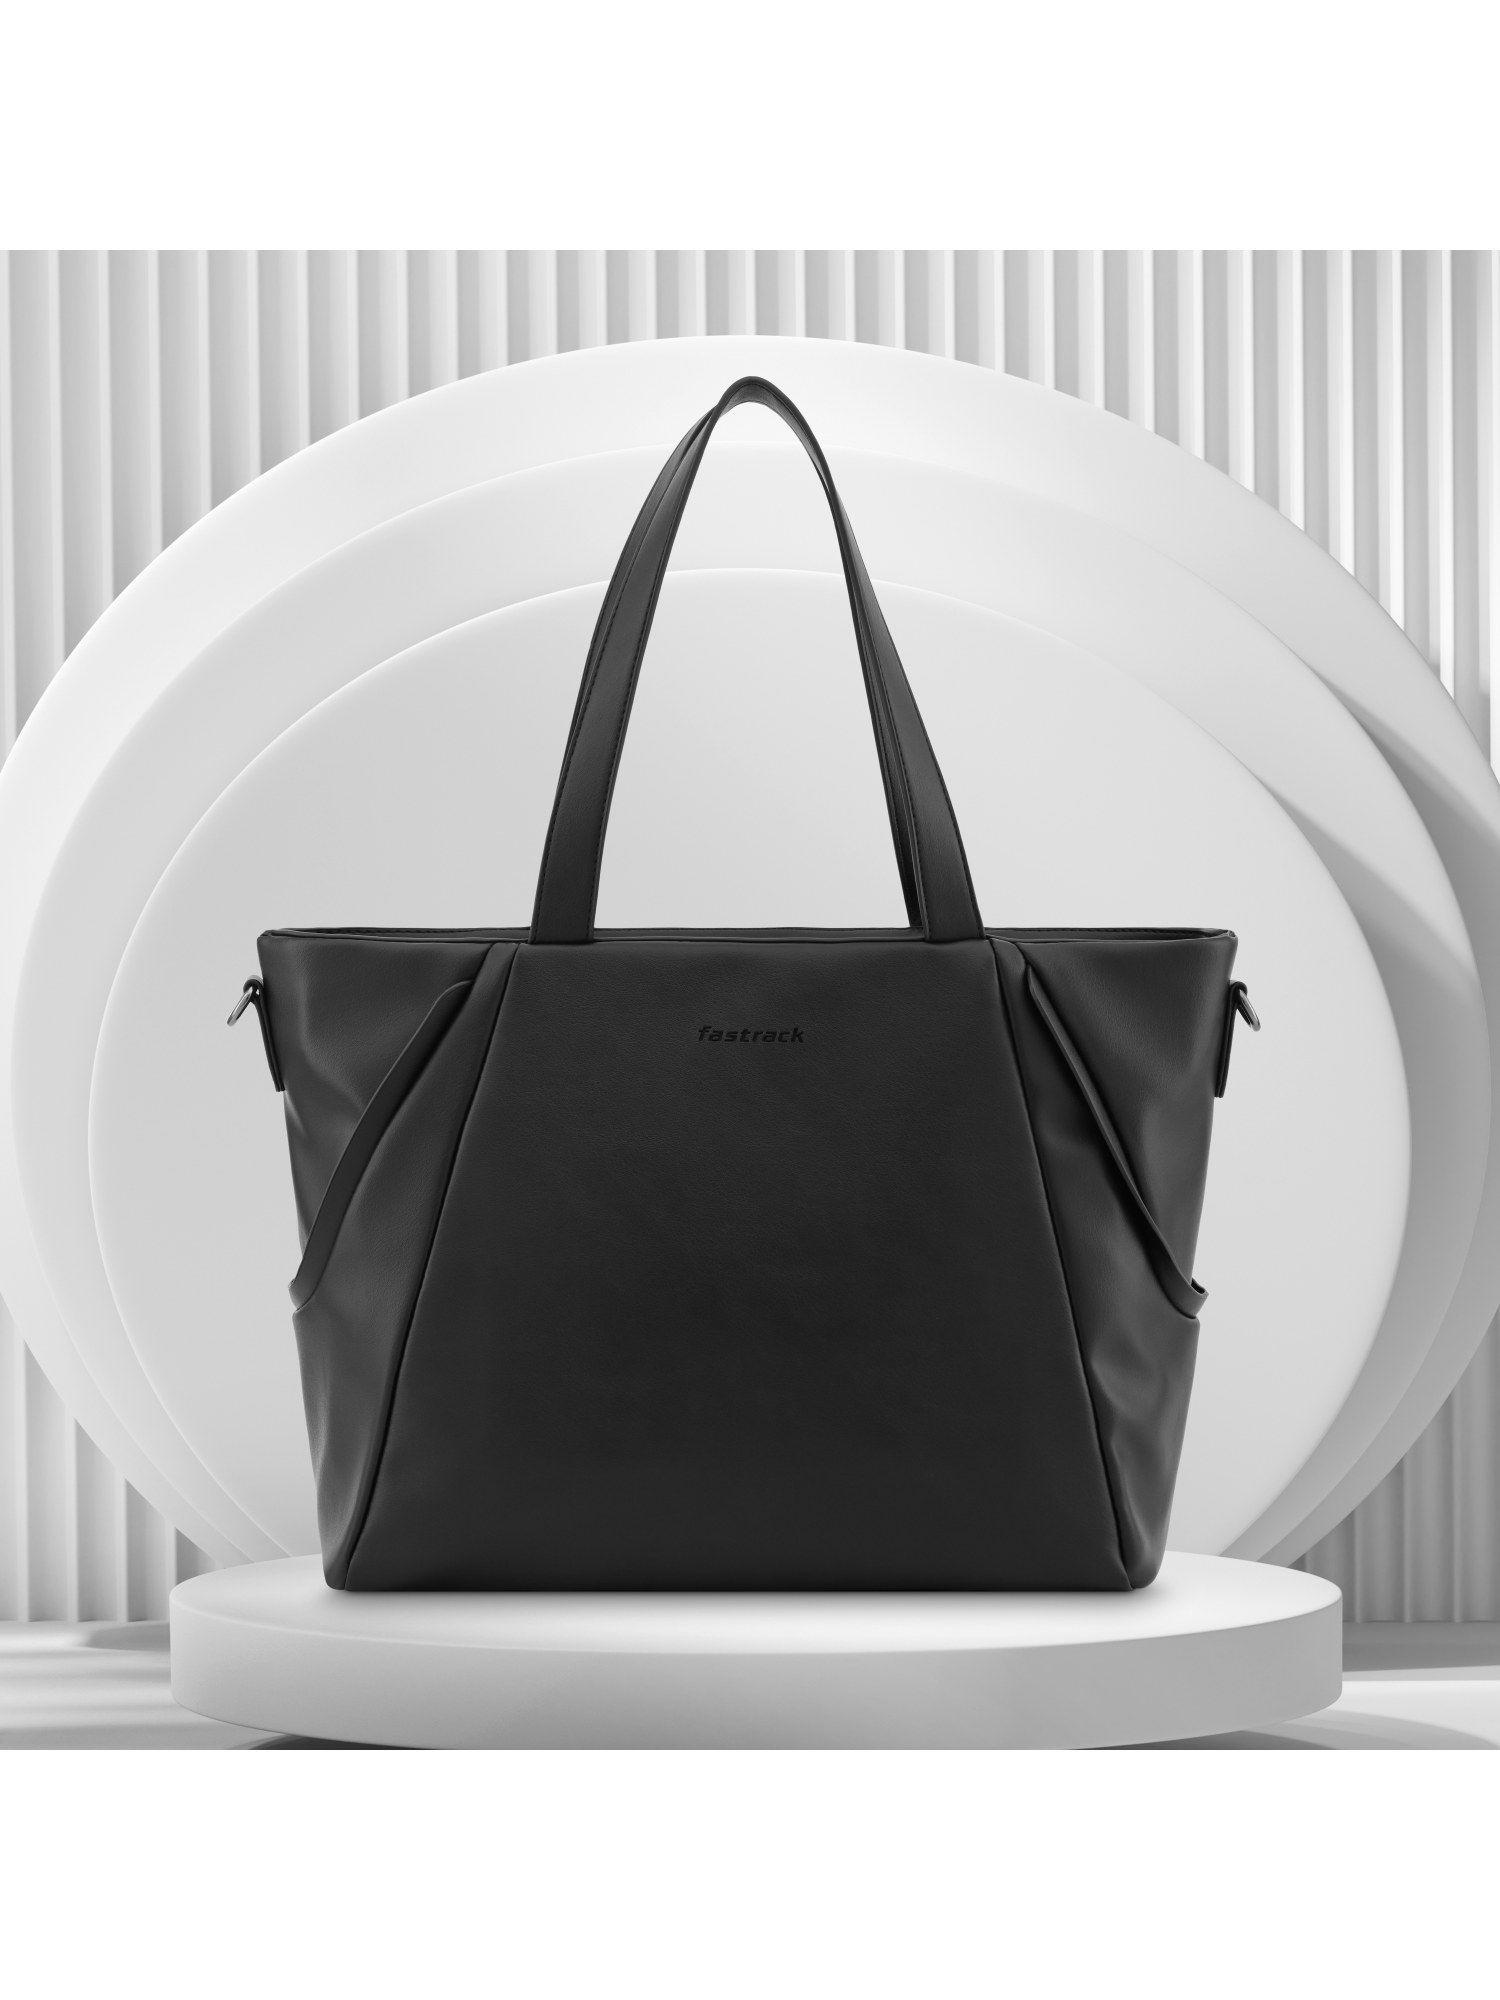 black laptop tote bag for women